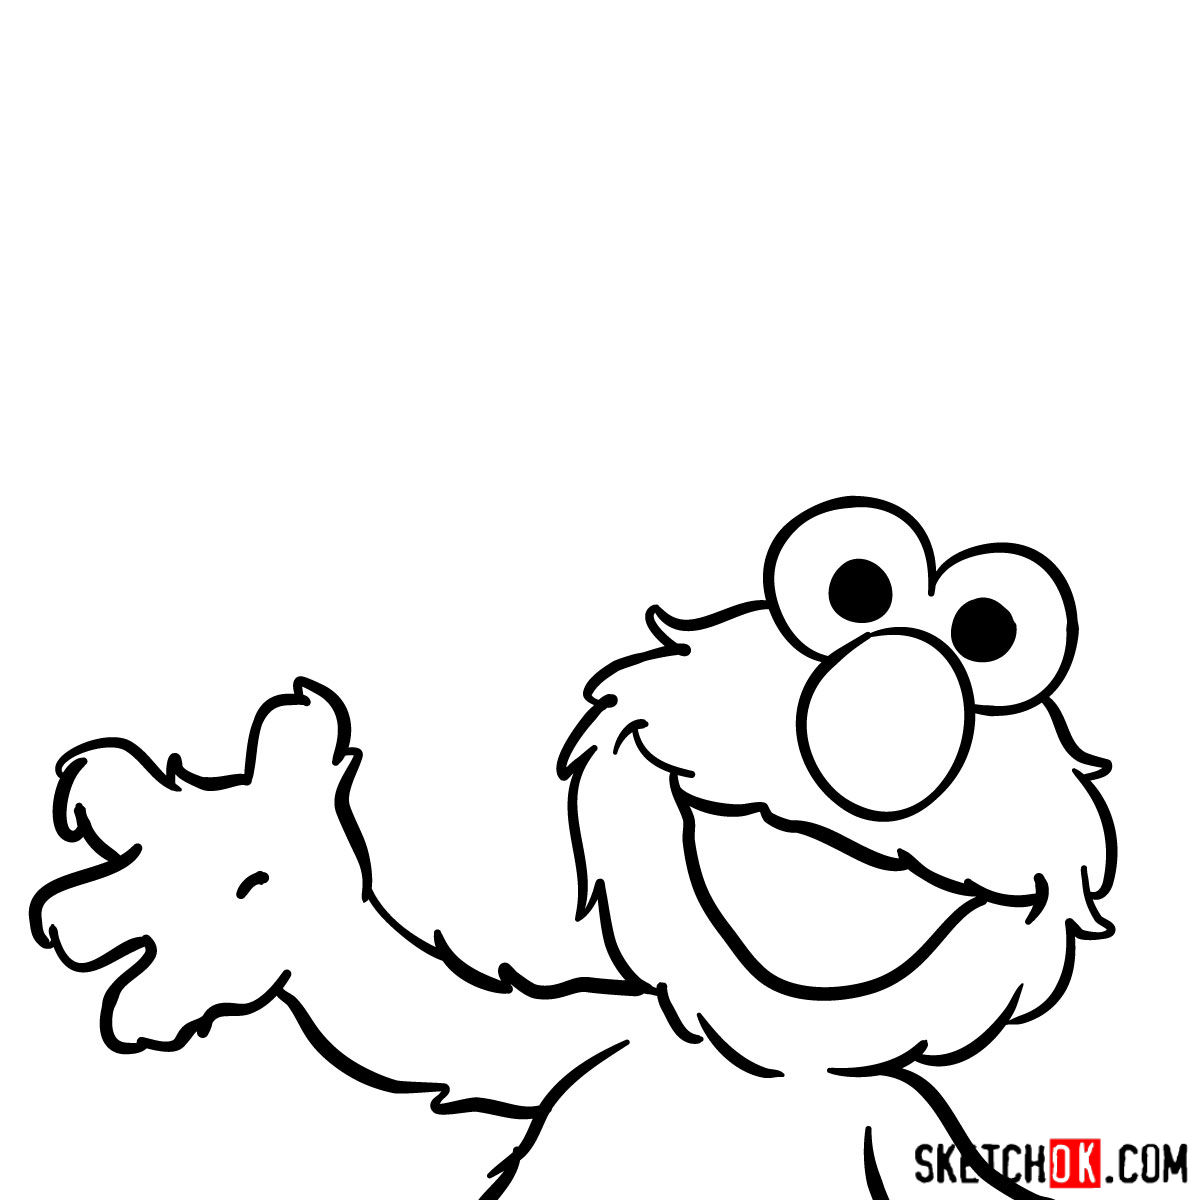 How to draw Elmo - step 07